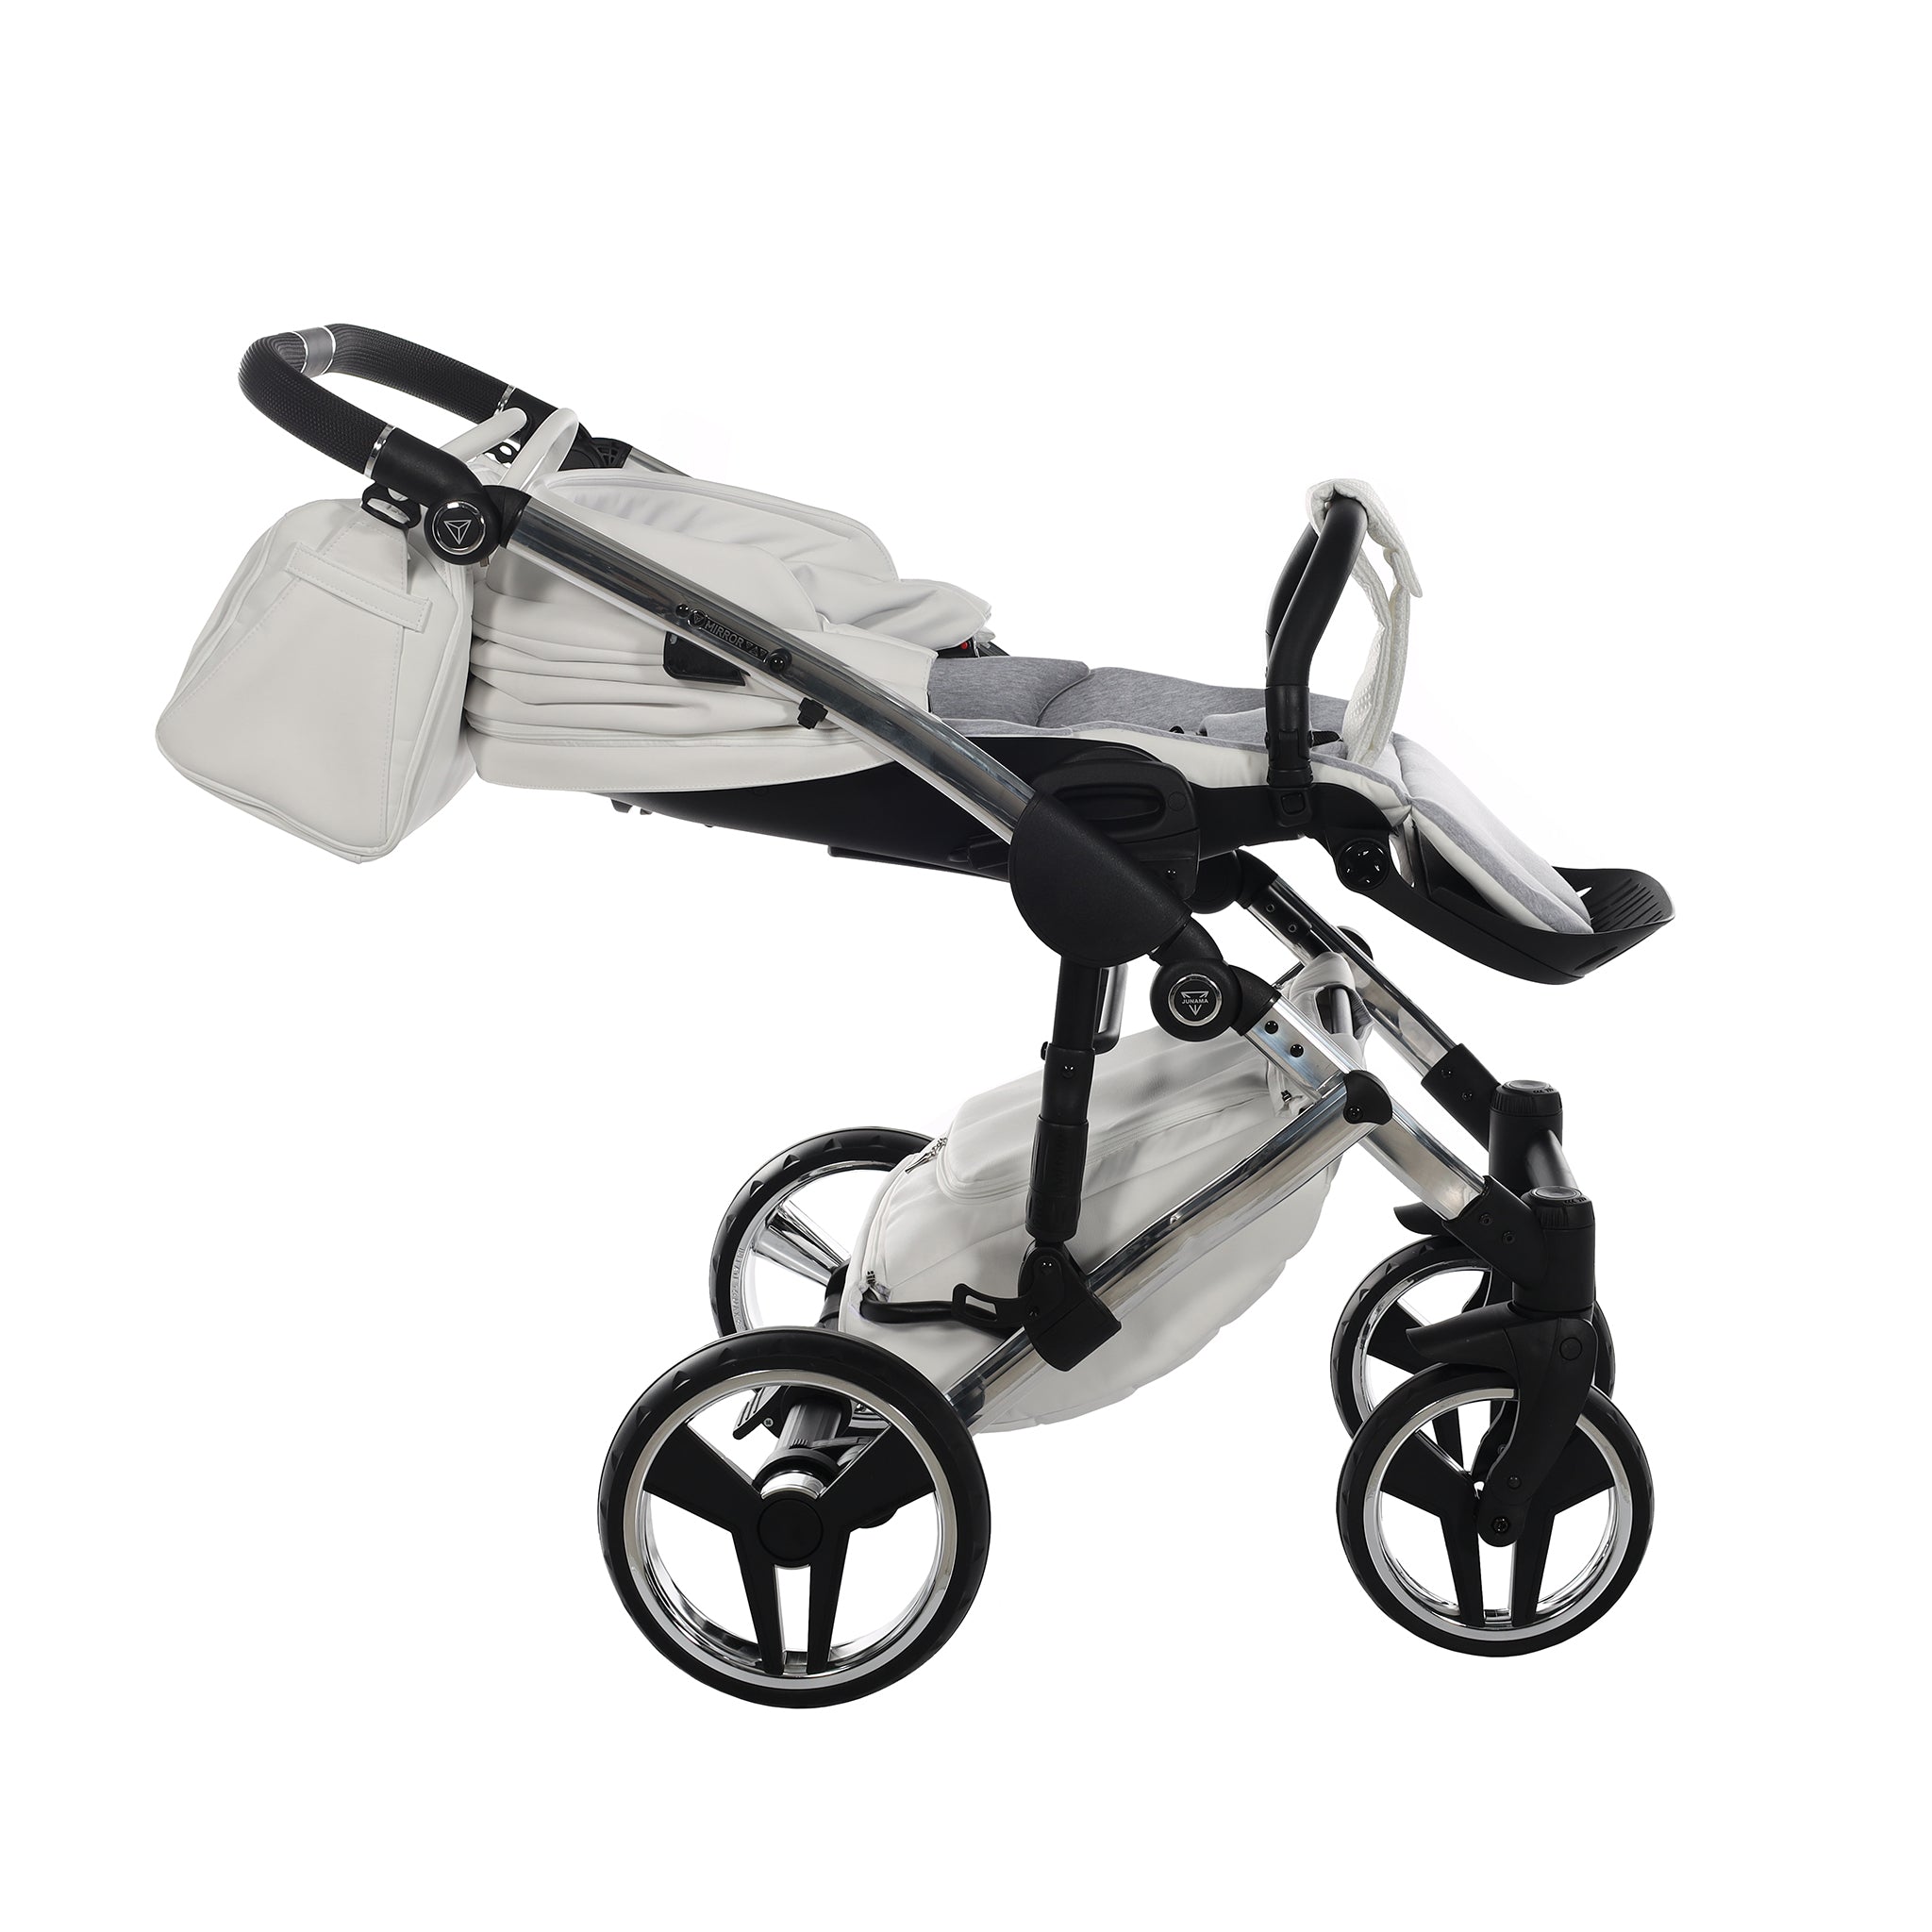 Junama Mirror, baby prams or stroller 2 in 1 - Silver chrome and Silver, Code number: JUNMIR04